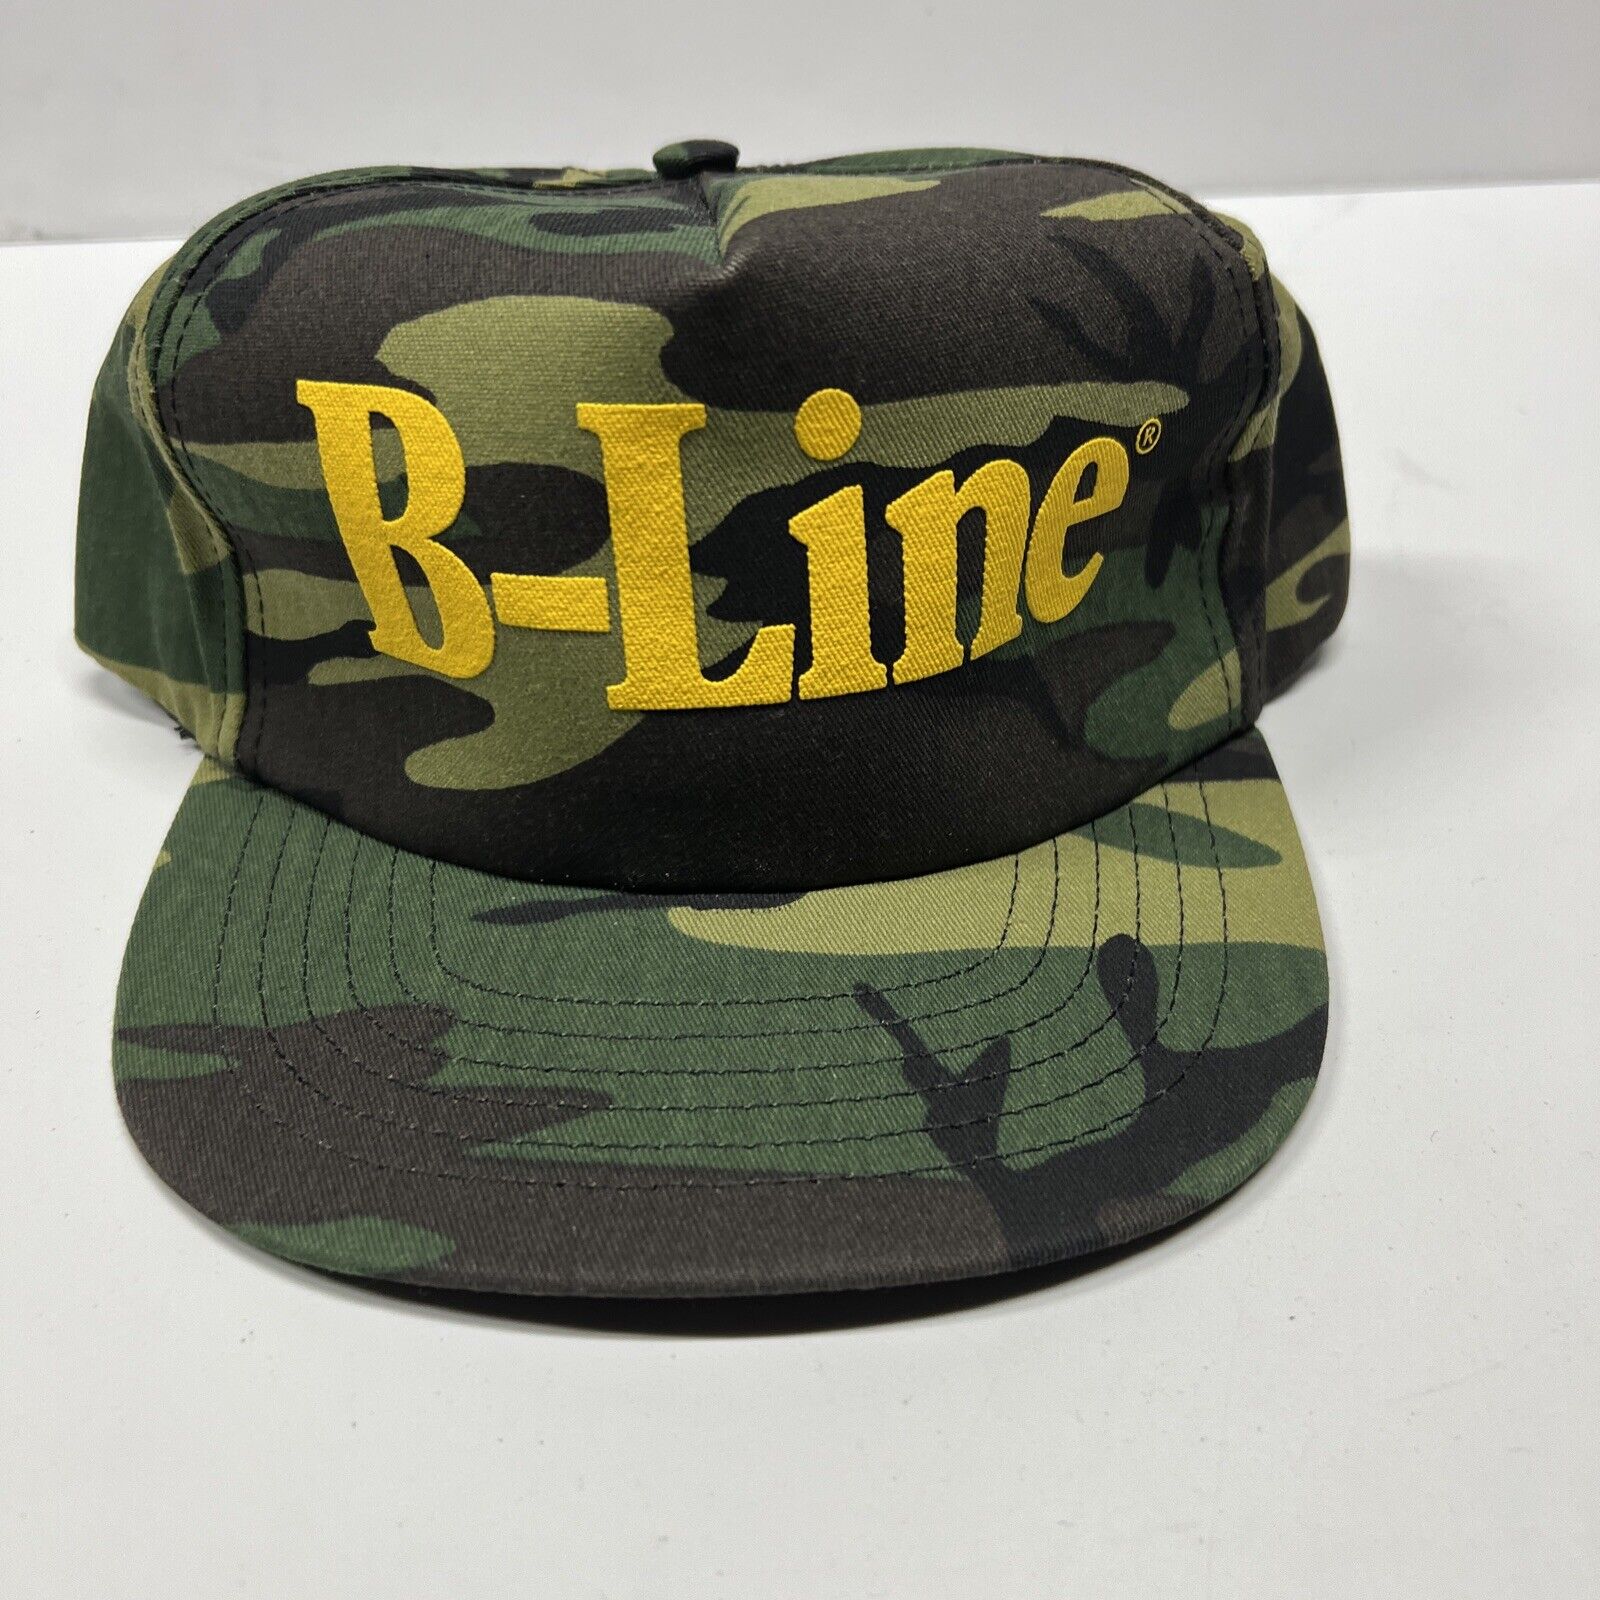 B-Line Vintage Snapback Baseball/Trucker Hat Camouflage USA Cap New